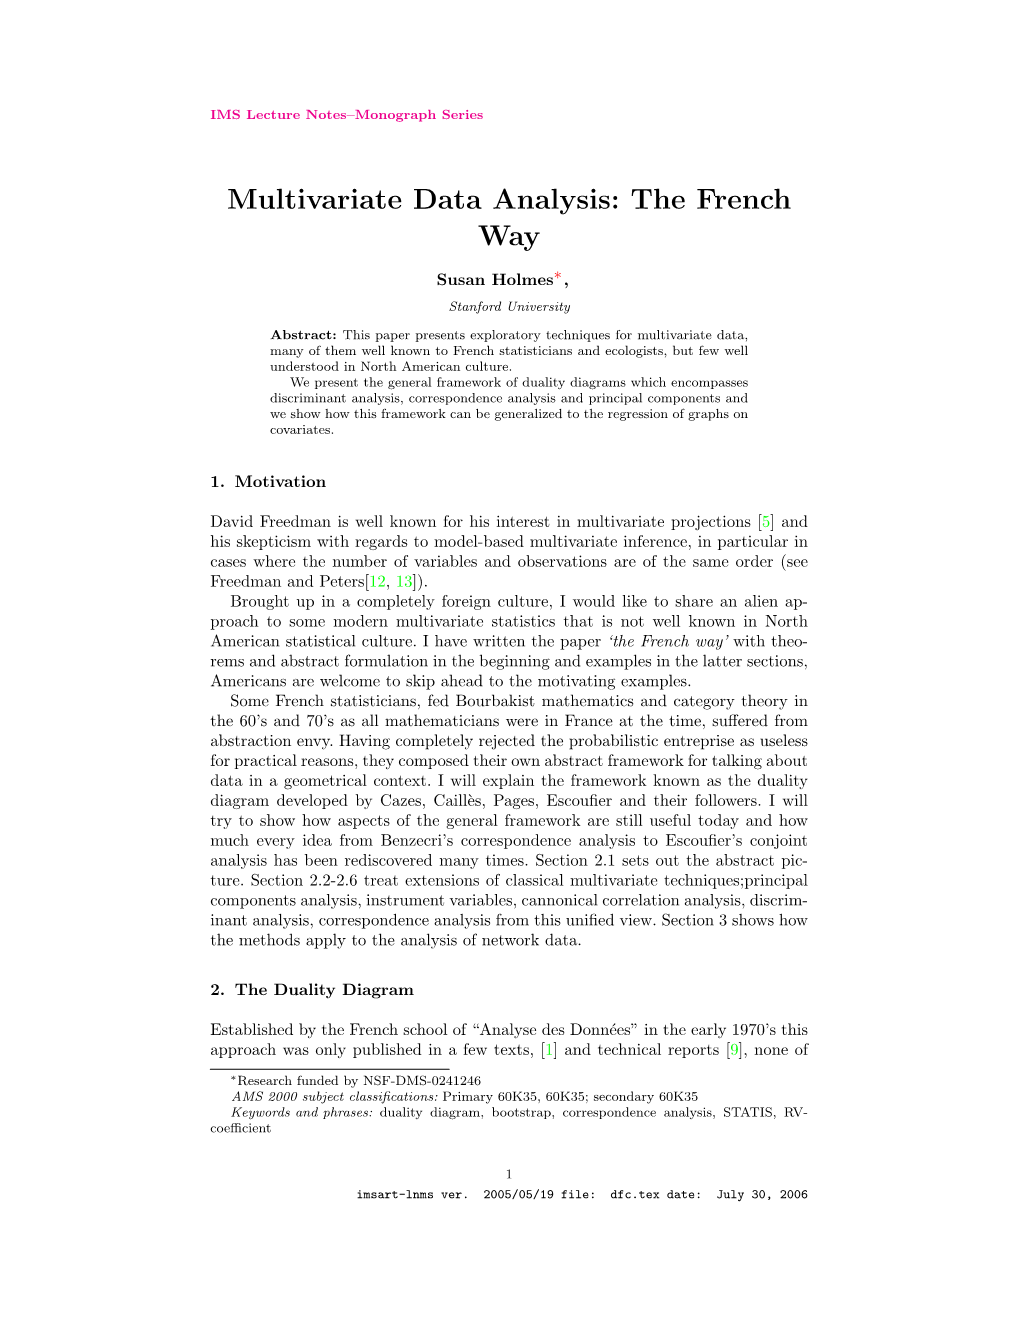 Multivariate Data Analysis: the French Way